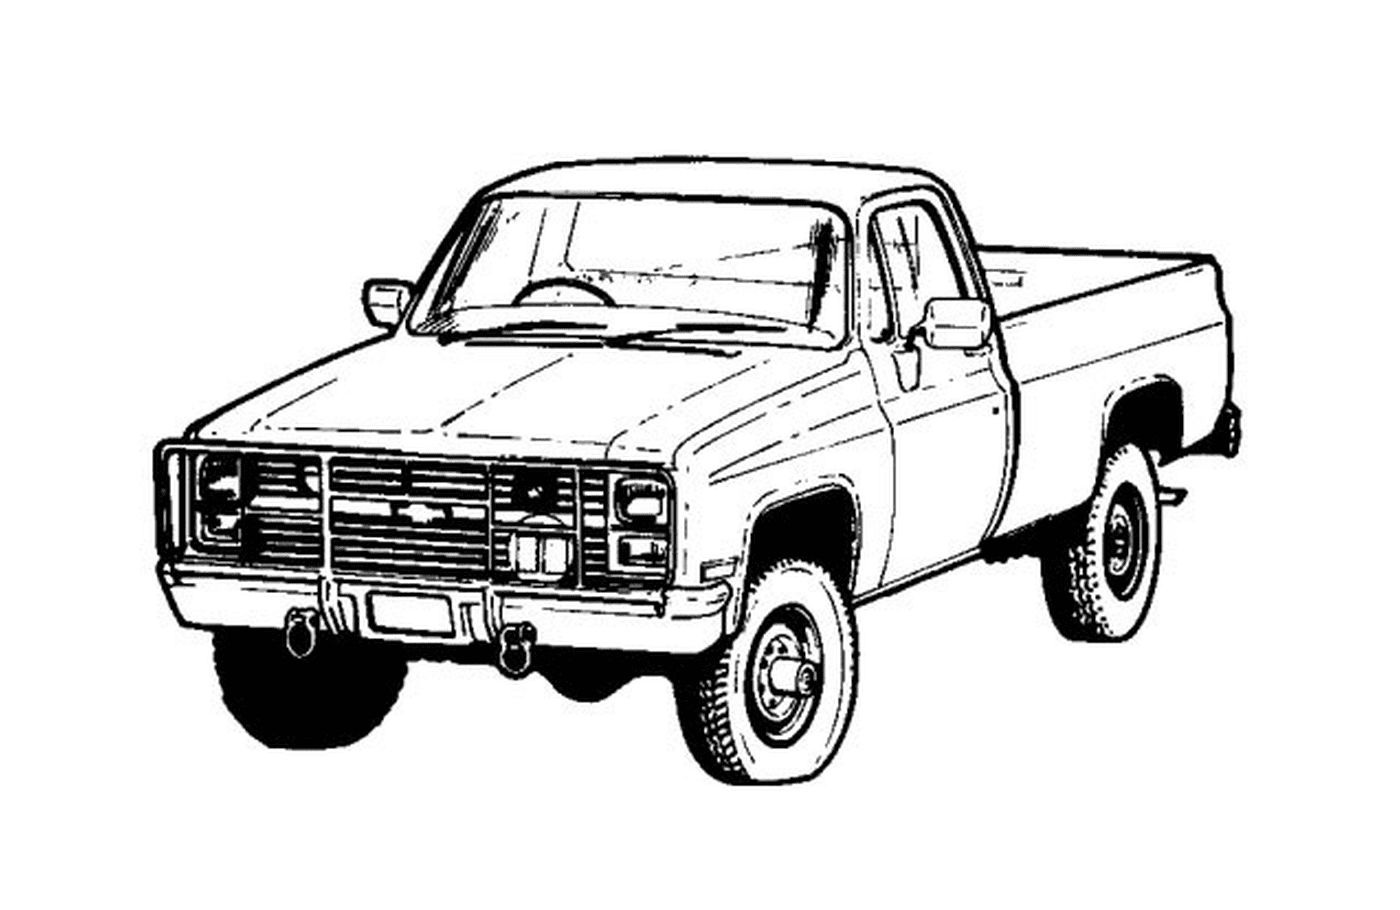   Pickup truck dans un dessin 